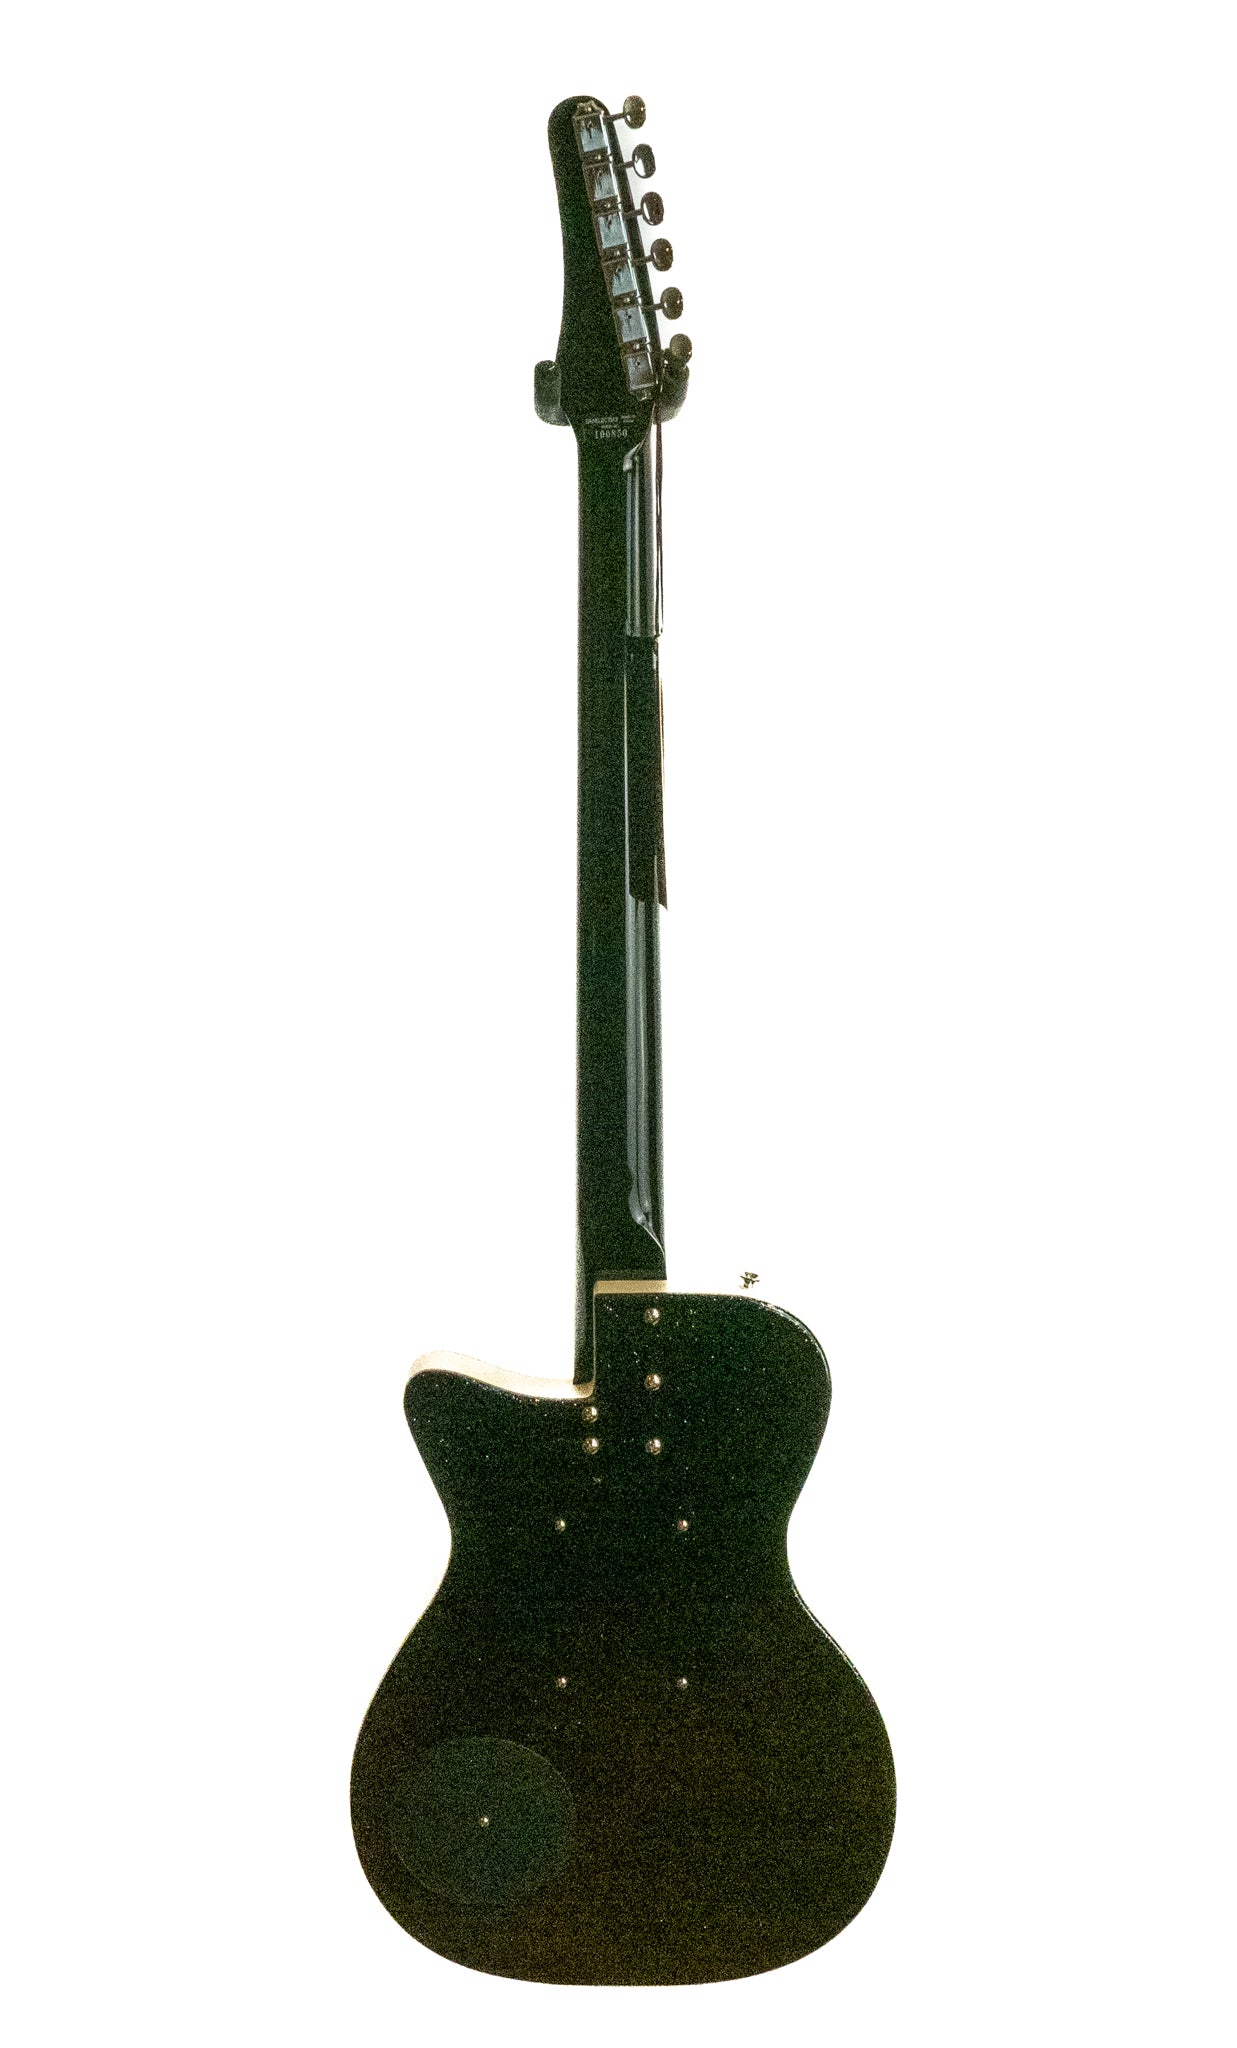 Danelectro 56 Baritone Black Metalflake electric guitar 6lbs, 11 ounces